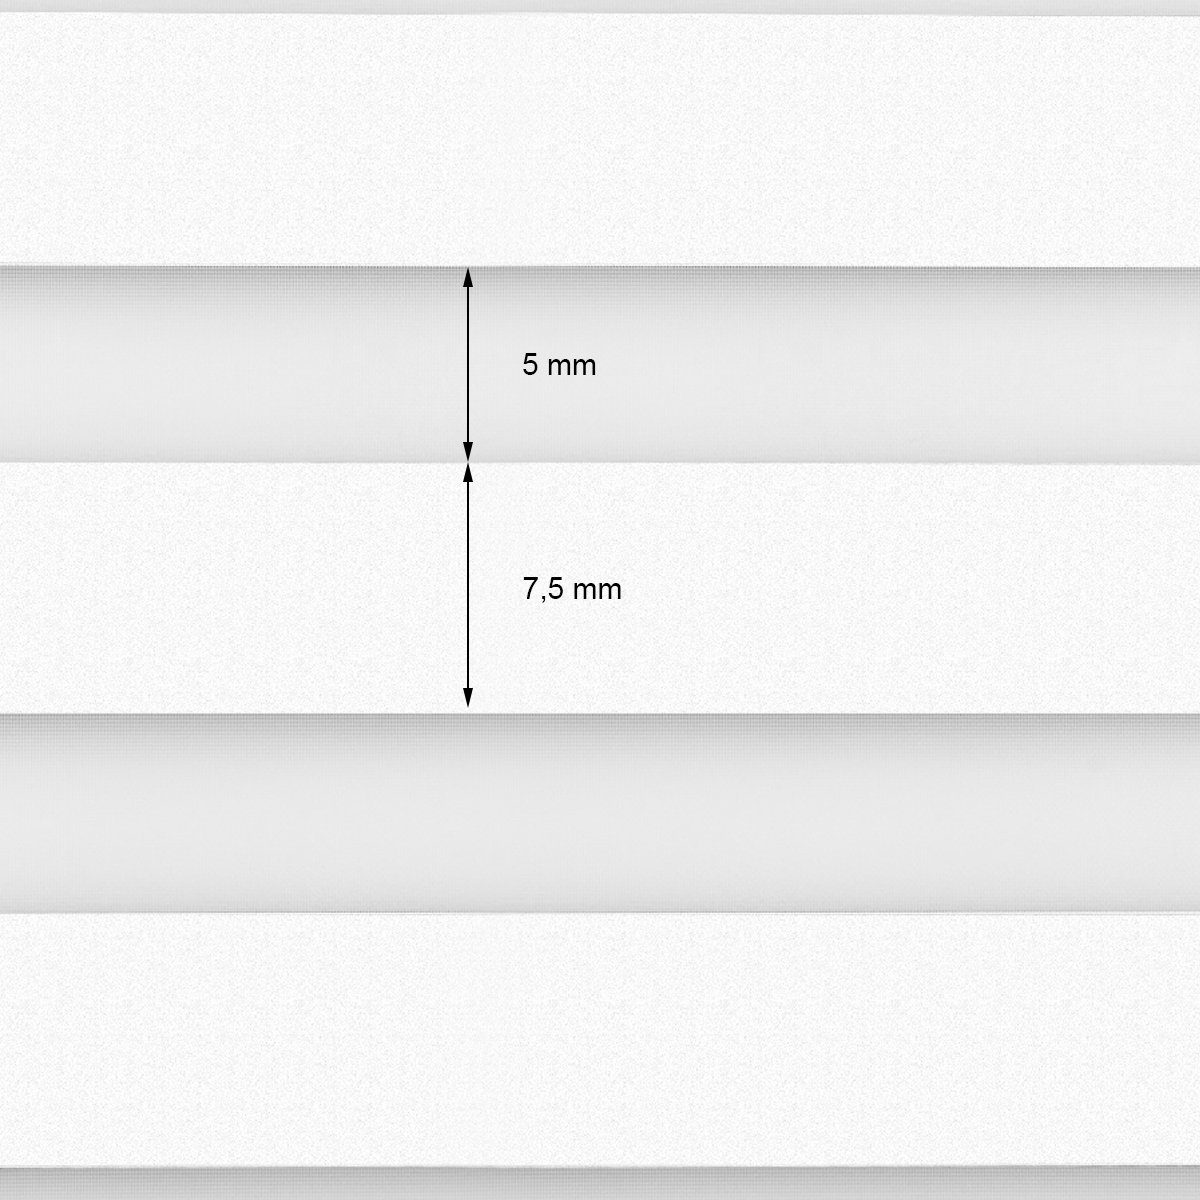 Befestigungsmaterial Germany, Bohren Klemmträger, 60x150cm cm, Klemmträgern, ECD Klemmträgern Weiß weiß, Klemmfix ohne mit 60x150 Doppelrollo